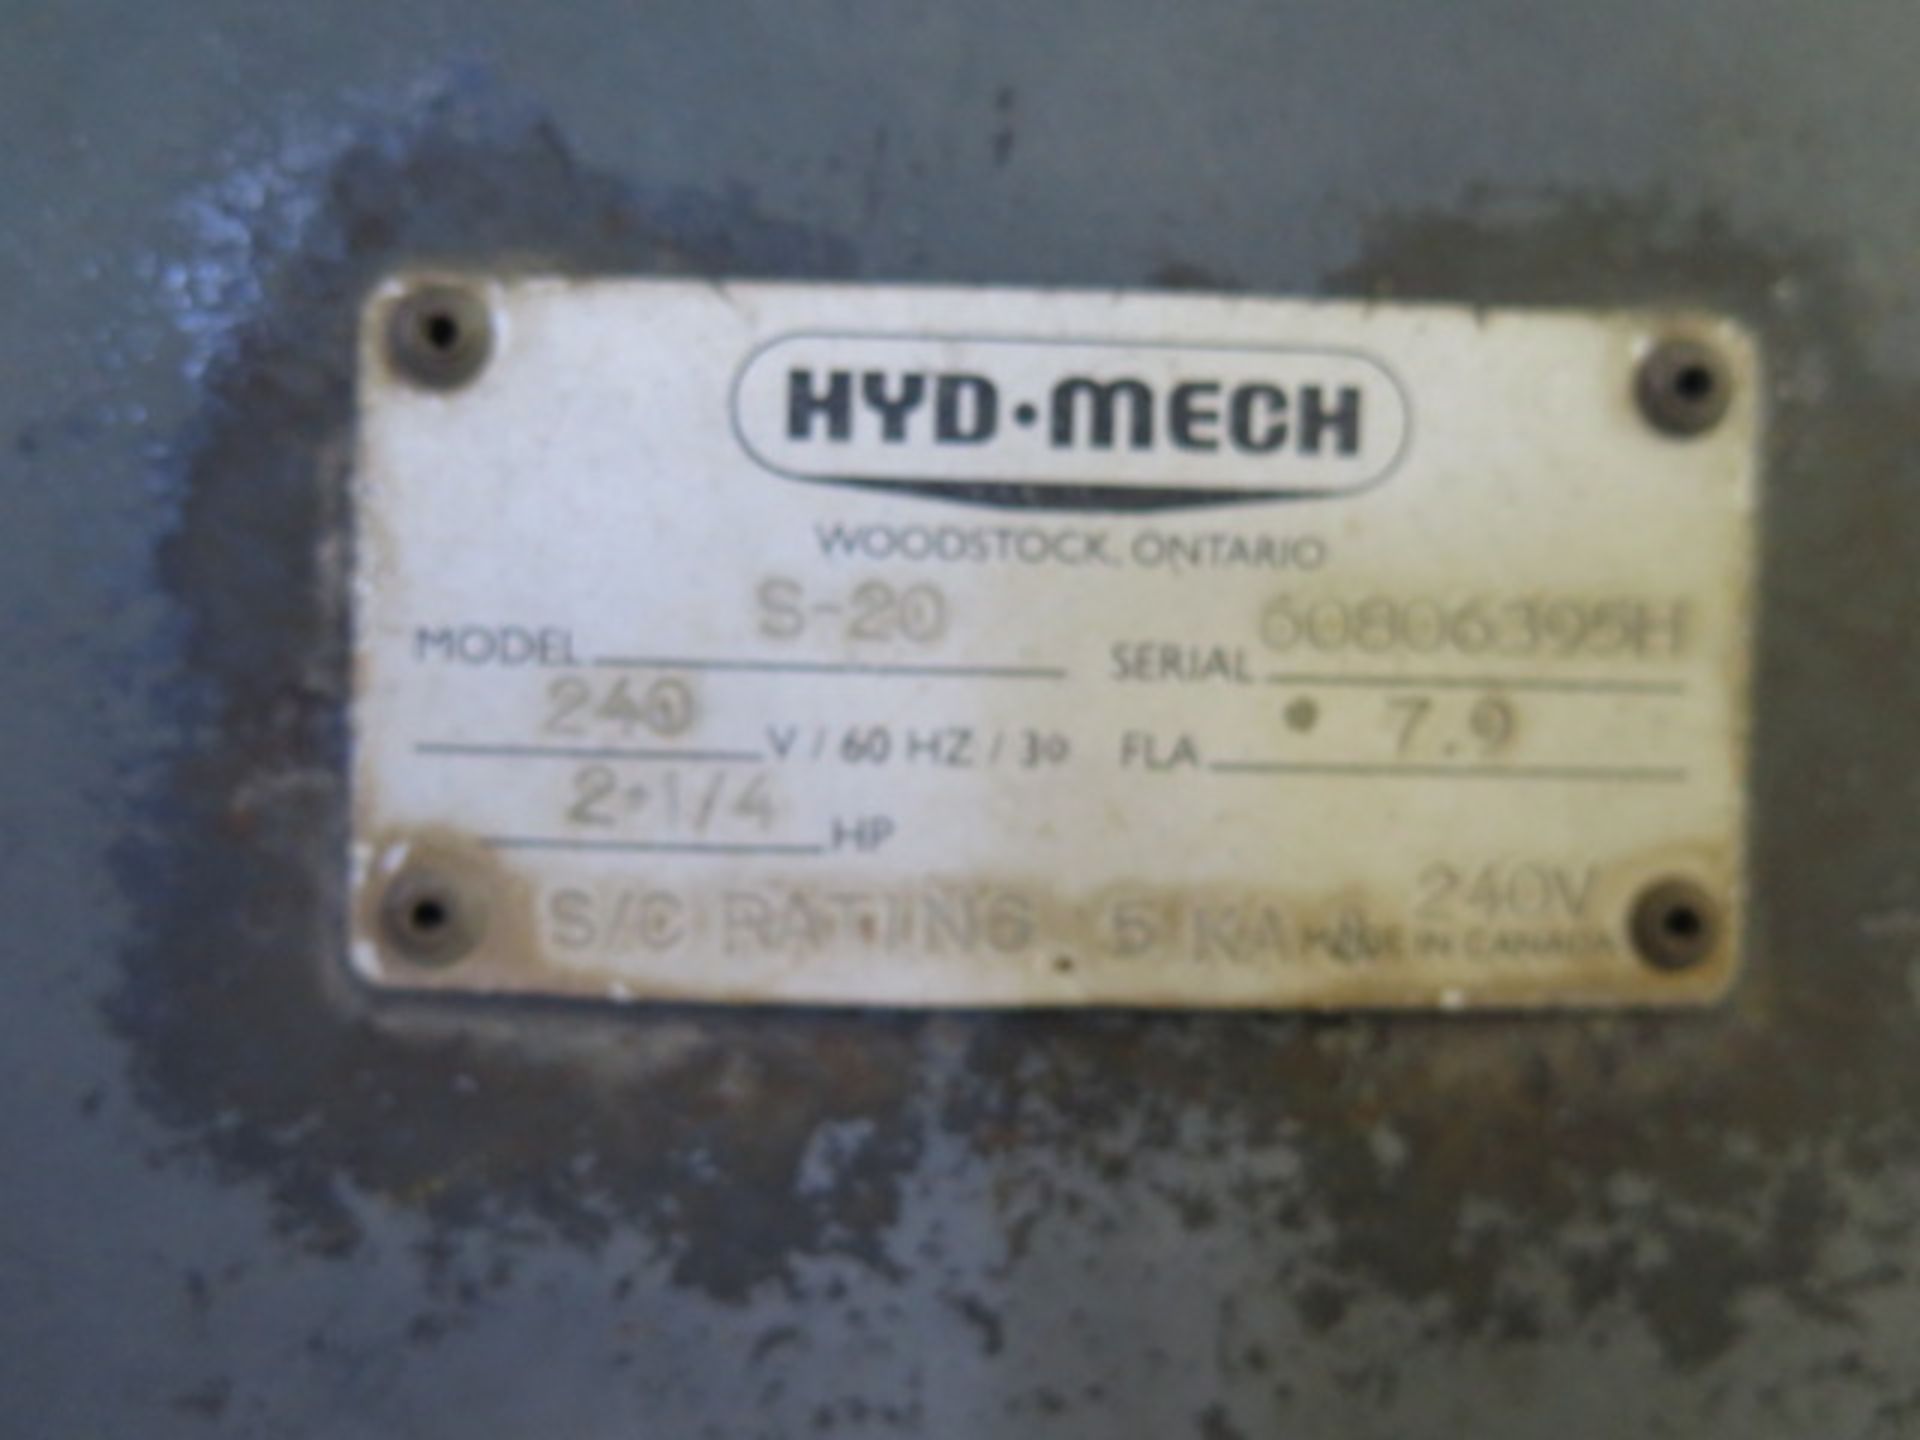 Hyd-Mech S-20 Series II 12” Horizontal Miter Band Saw s/n 60806395H w/ Hyd-Mech Controls, - Image 7 of 7